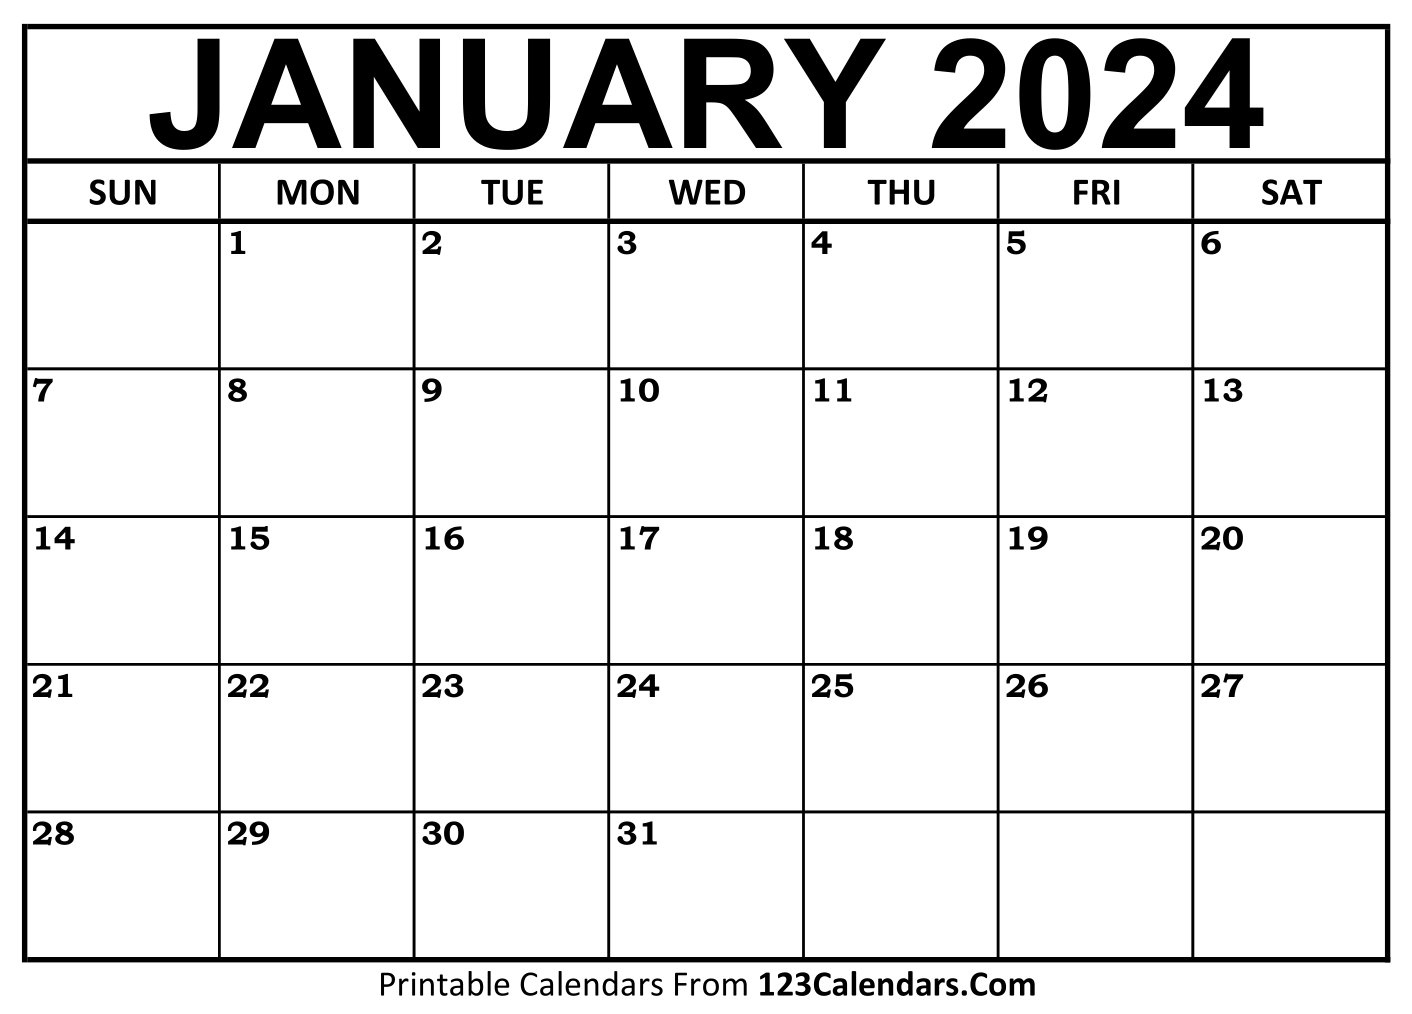 Printable January 2024 Calendar Templates - 123Calendars | Free Printable Calendar 2024 Wiki